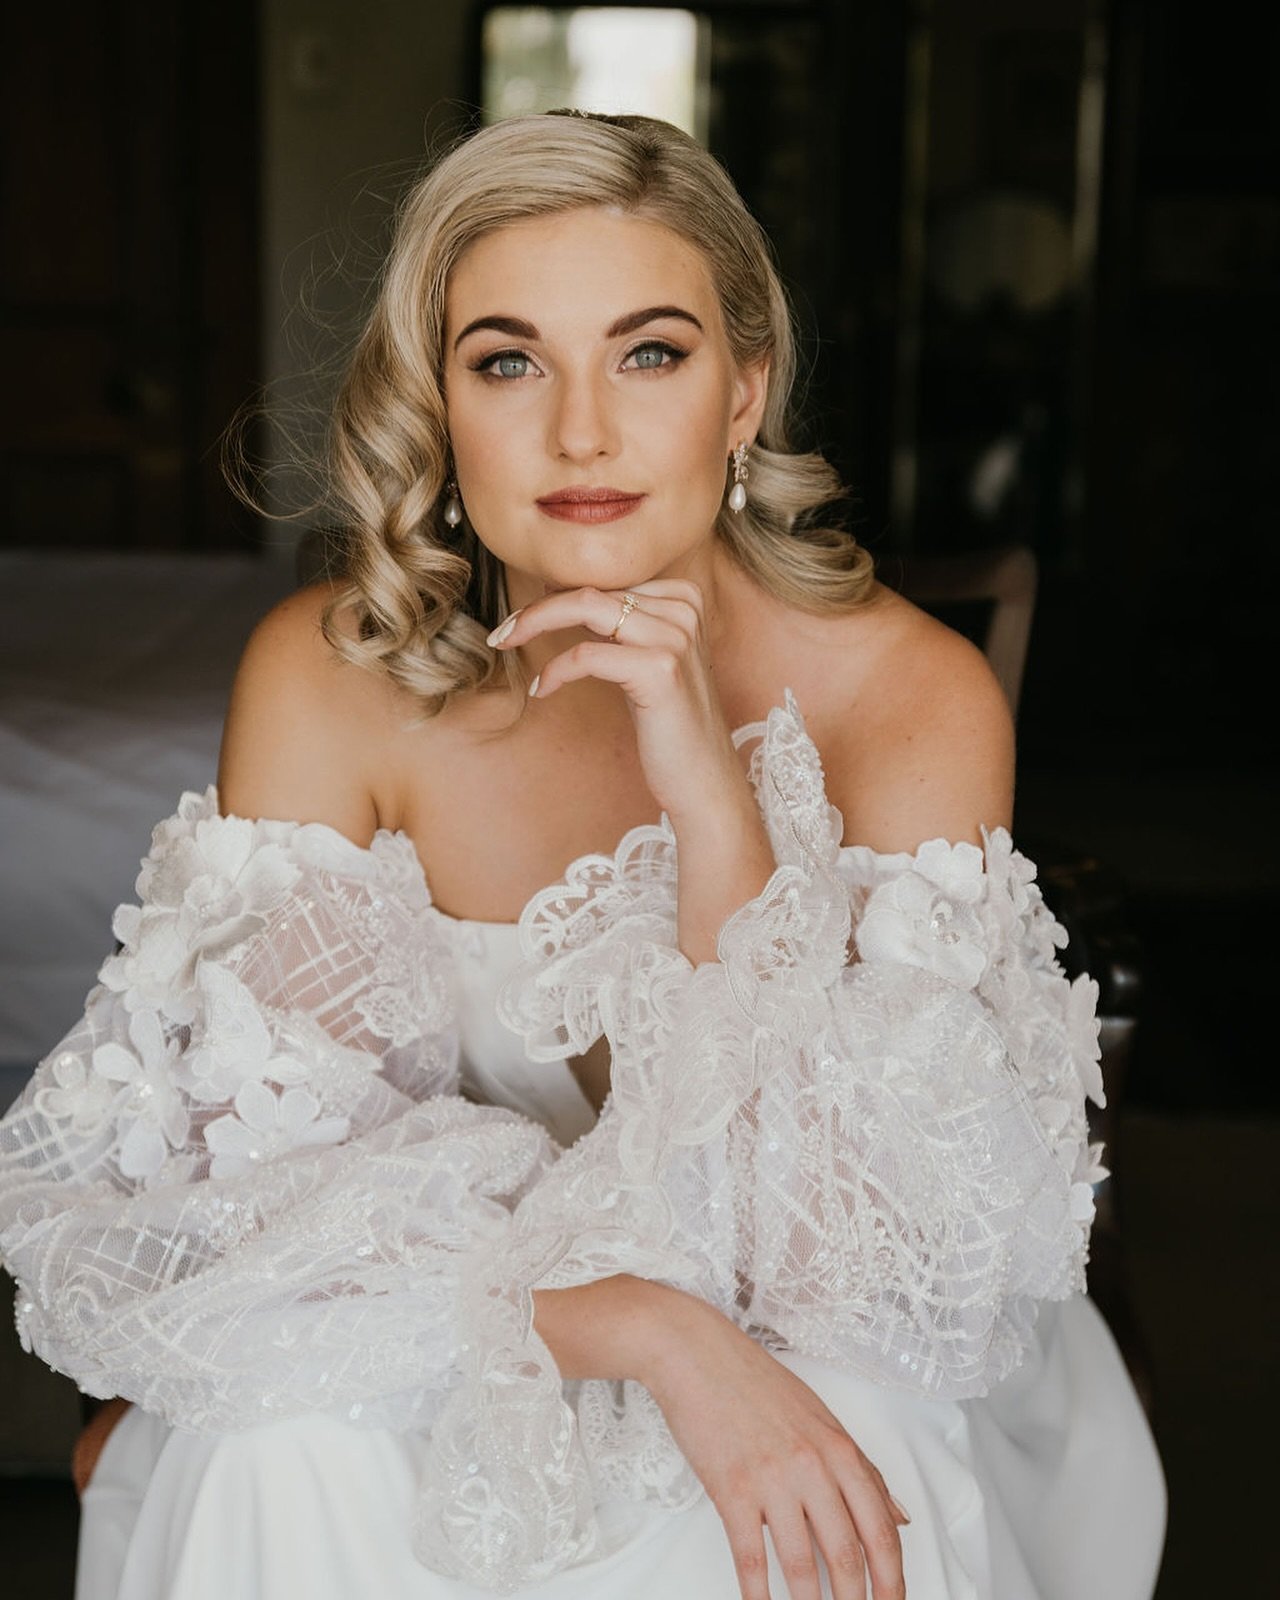 Timeless beauty

#bride #voguebride #dior #chanel #cocochanel #frenchbride #frenchcouture #weddingphotographer #stellenbosch #spiceupyourlife #voguewedding #armani